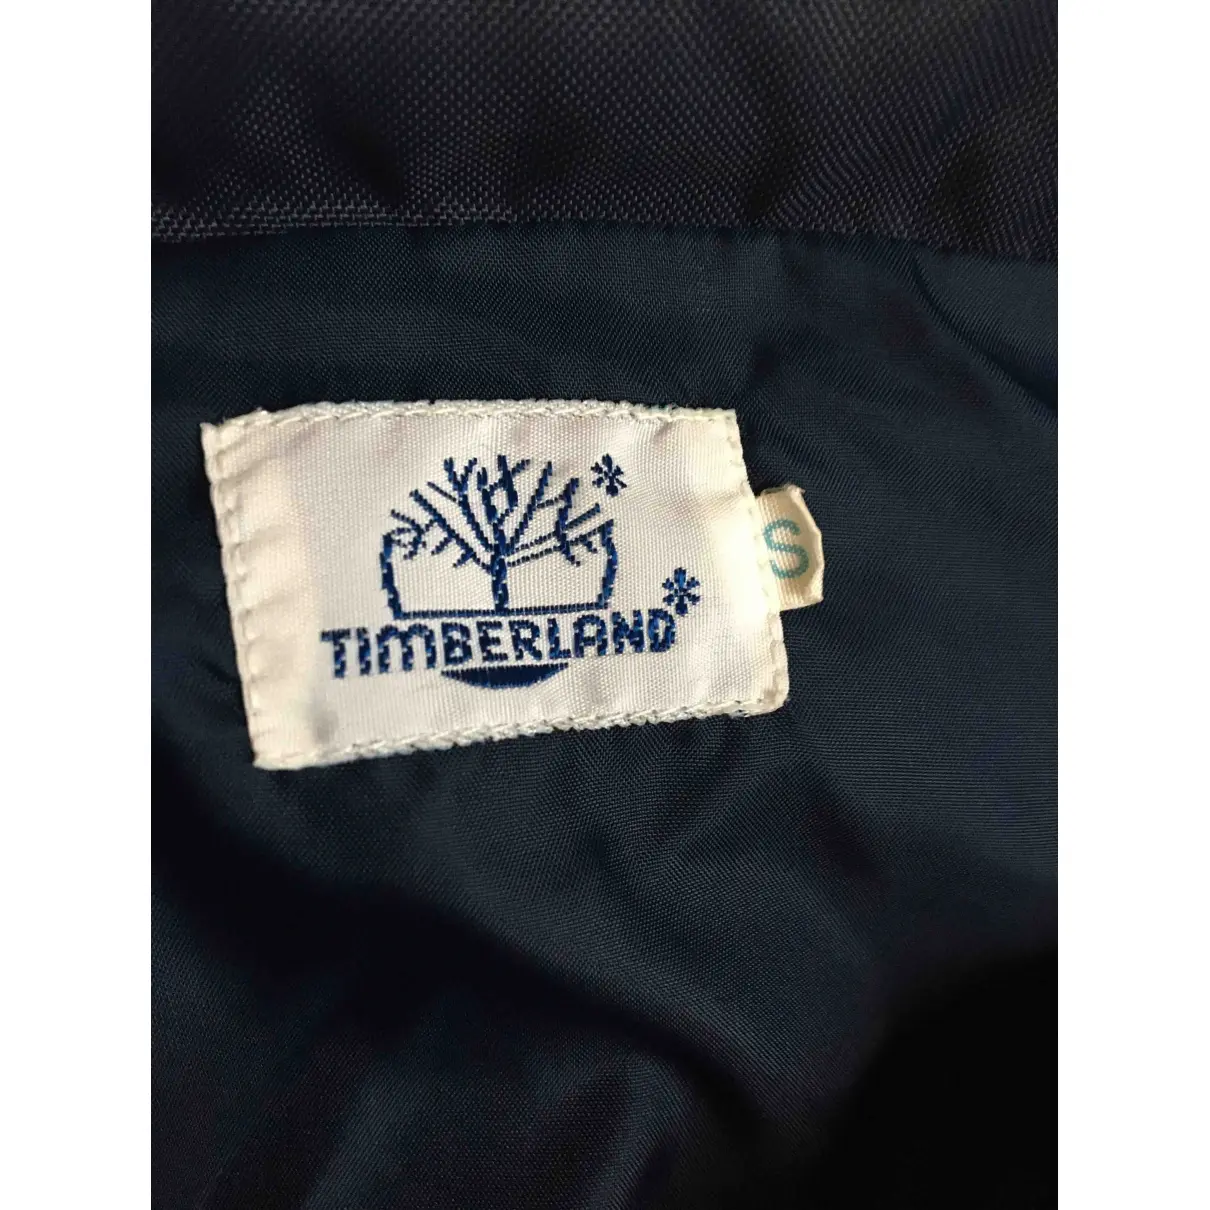 Buy Timberland Jacket online